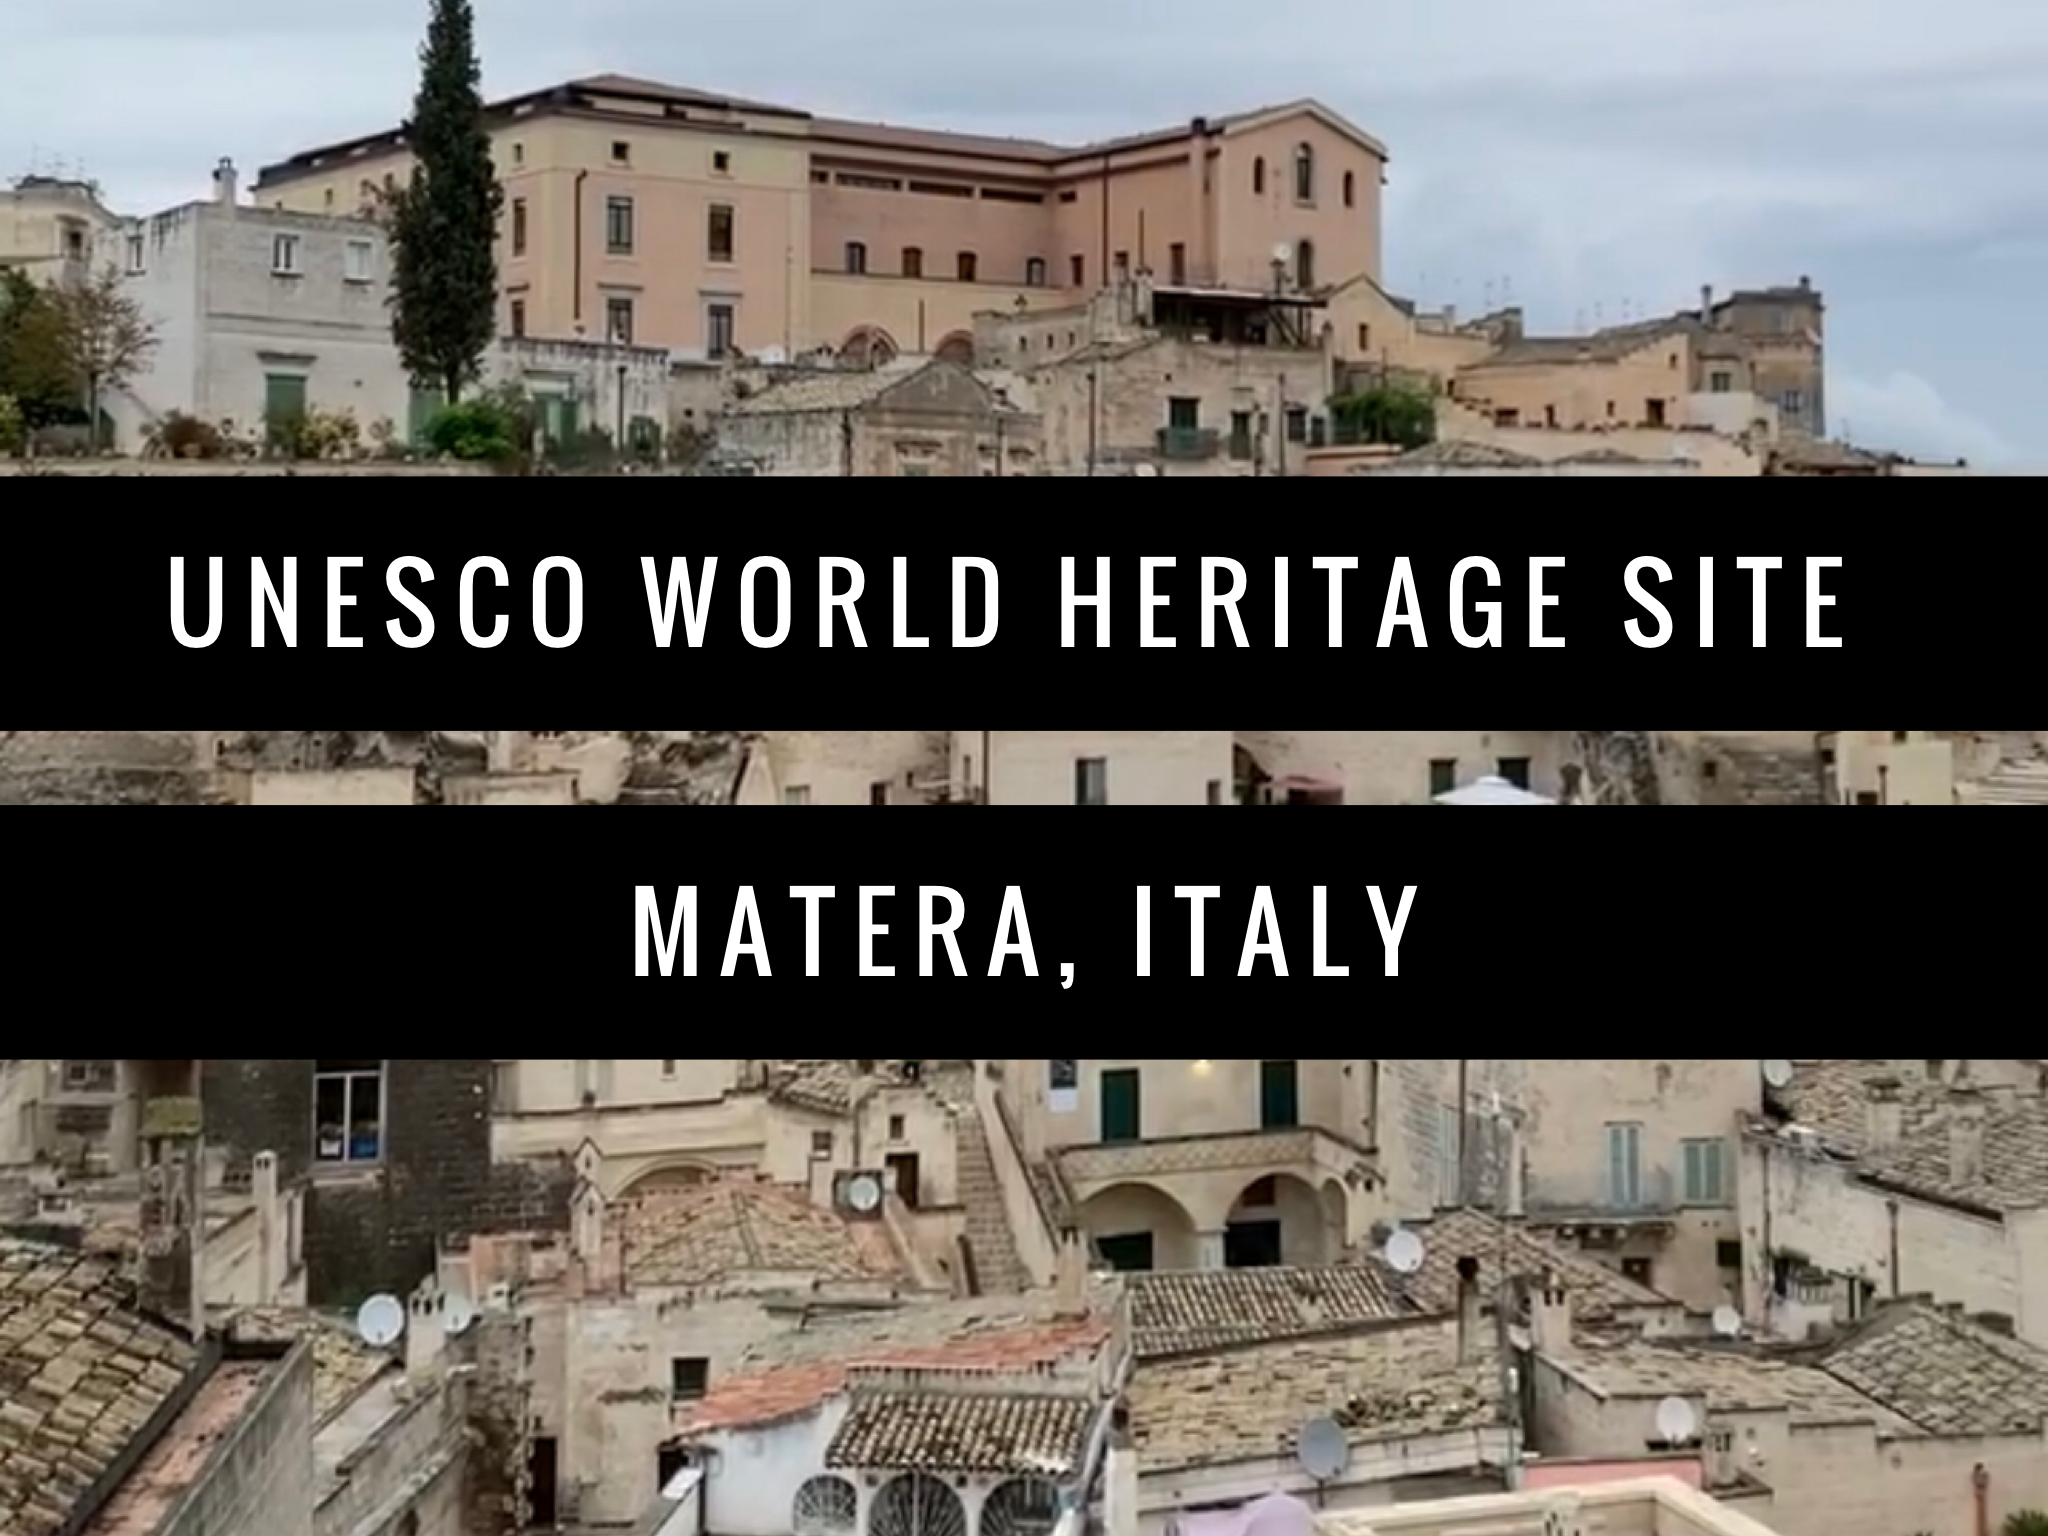 Matera Italy a UNESCO World Heritage Site near Puglia Italy